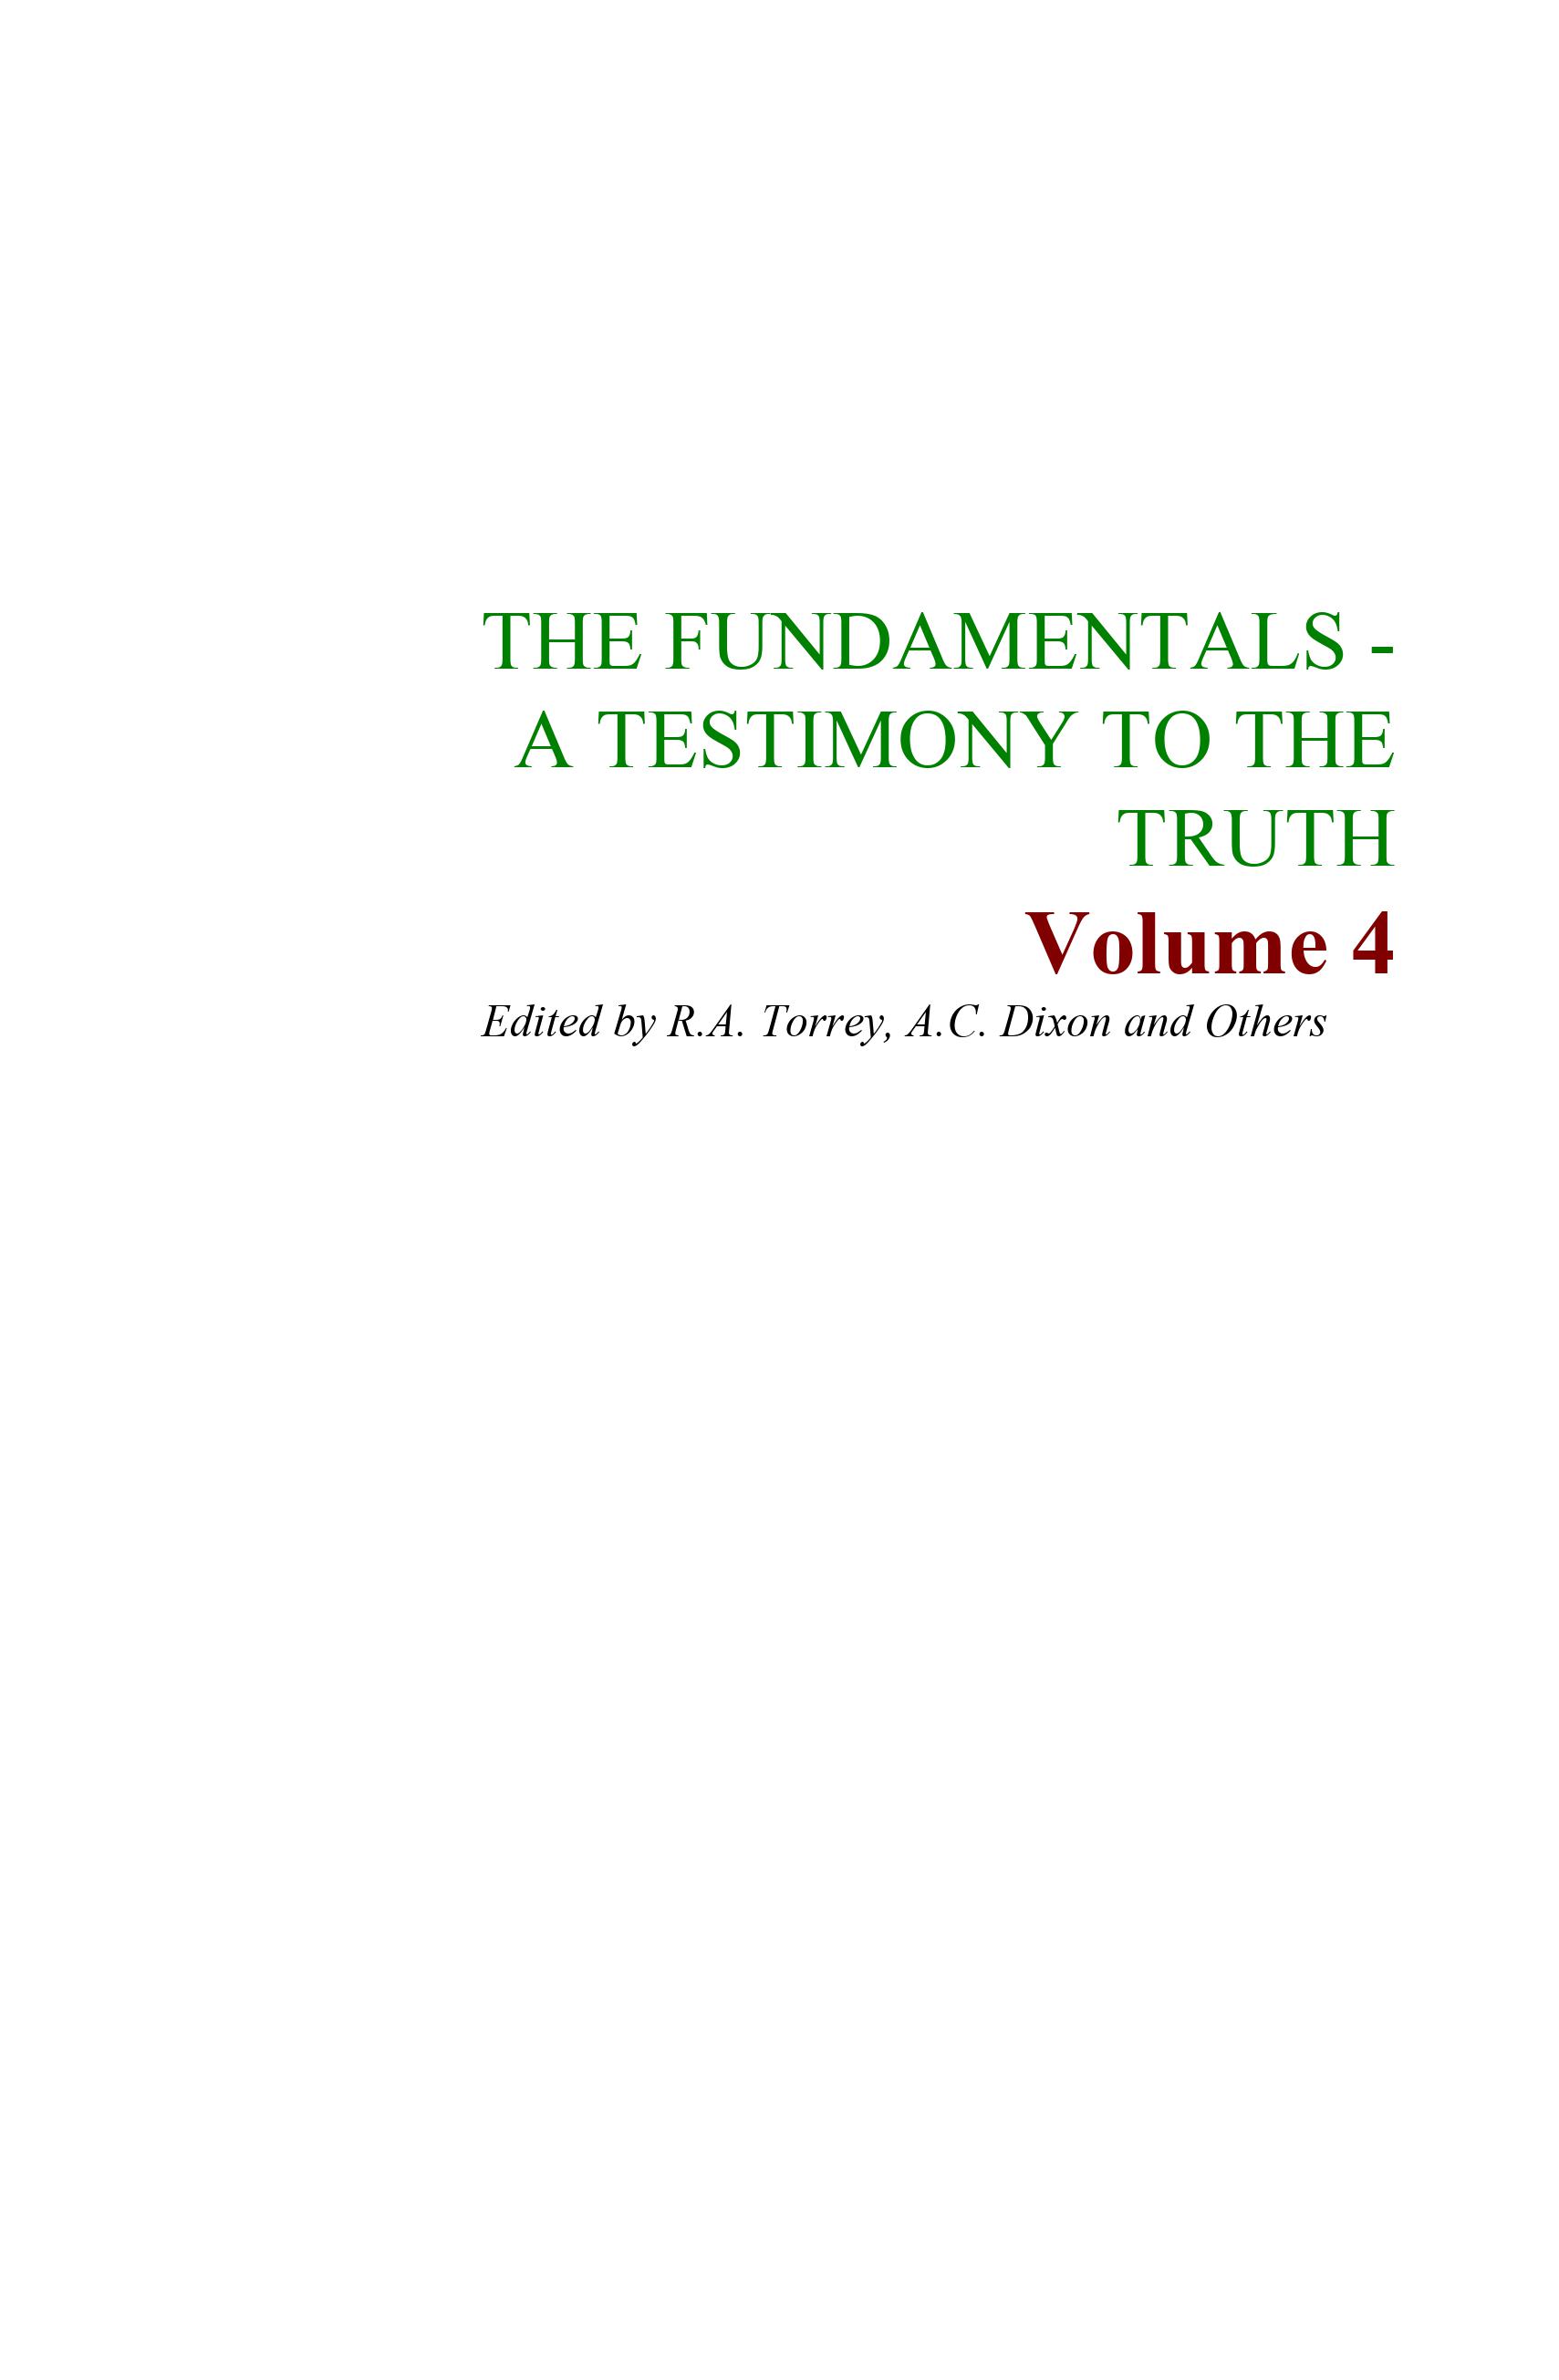 The Fundamentals, Volume 4